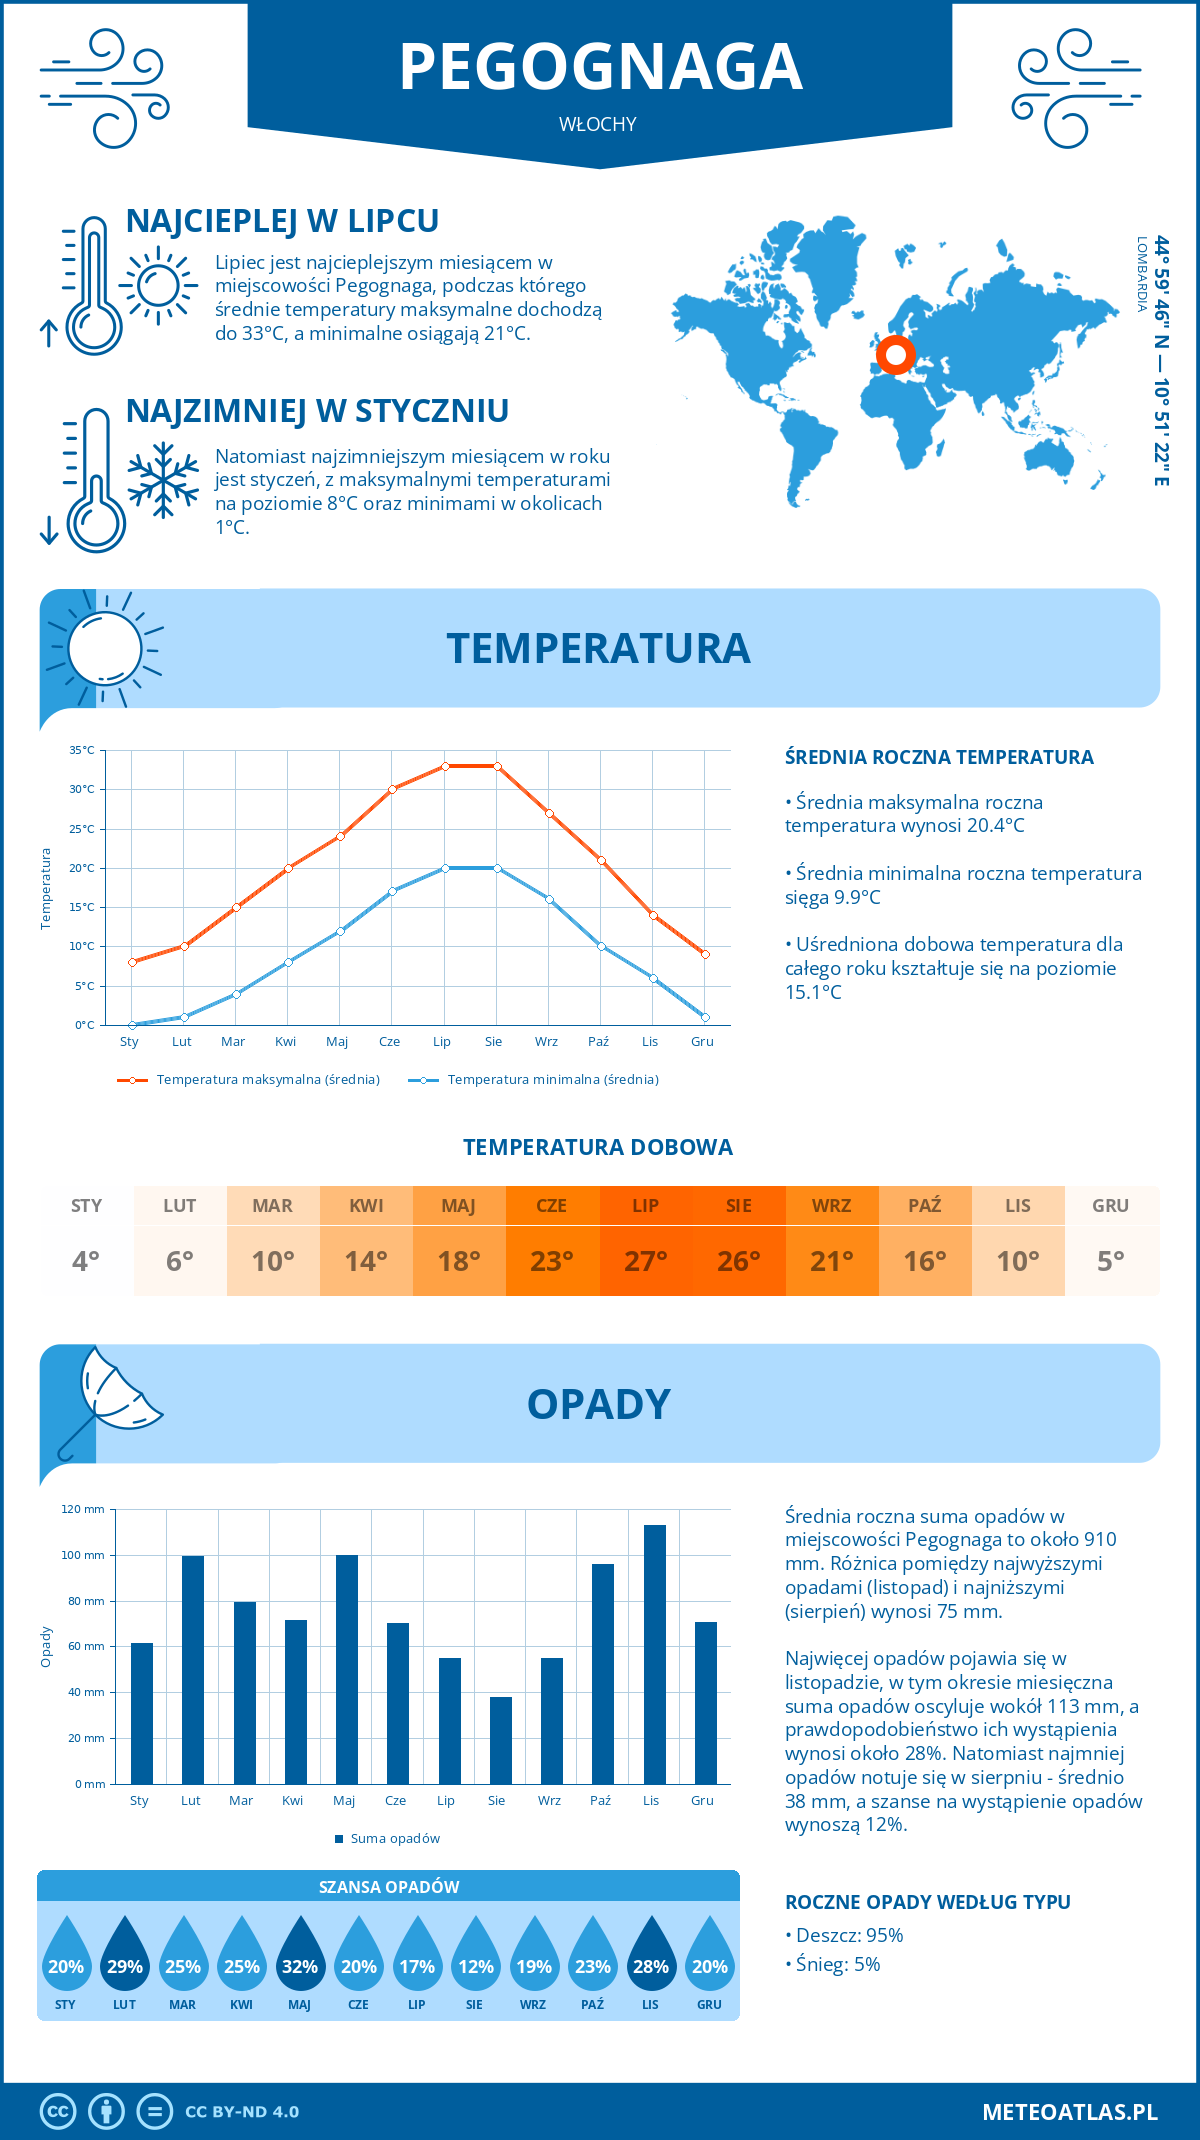 Pogoda Pegognaga (Włochy). Temperatura oraz opady.